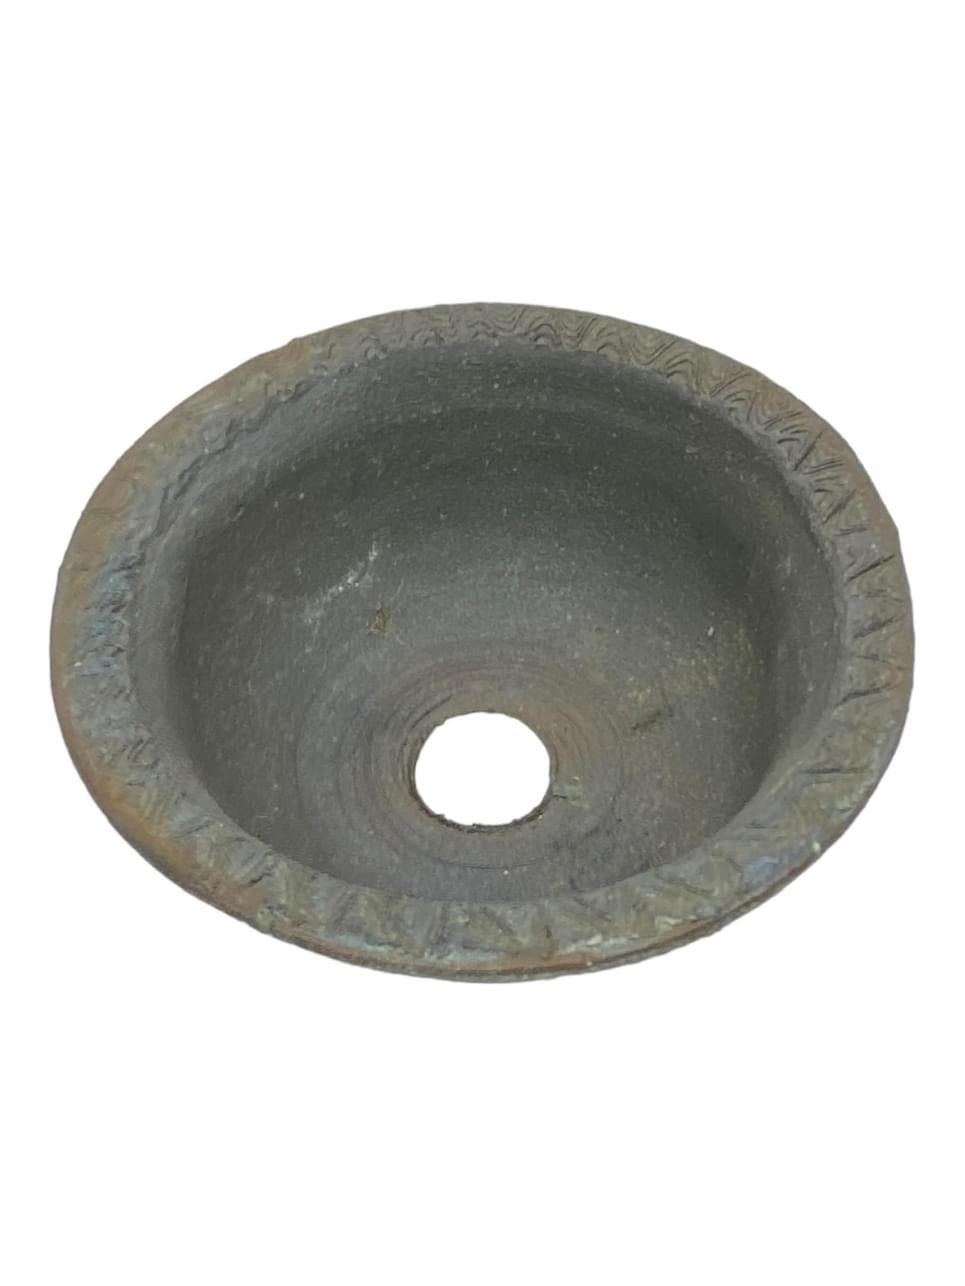 Tamba Tachikui-ware - Older Round Bowl Bonsai or Accent Pot